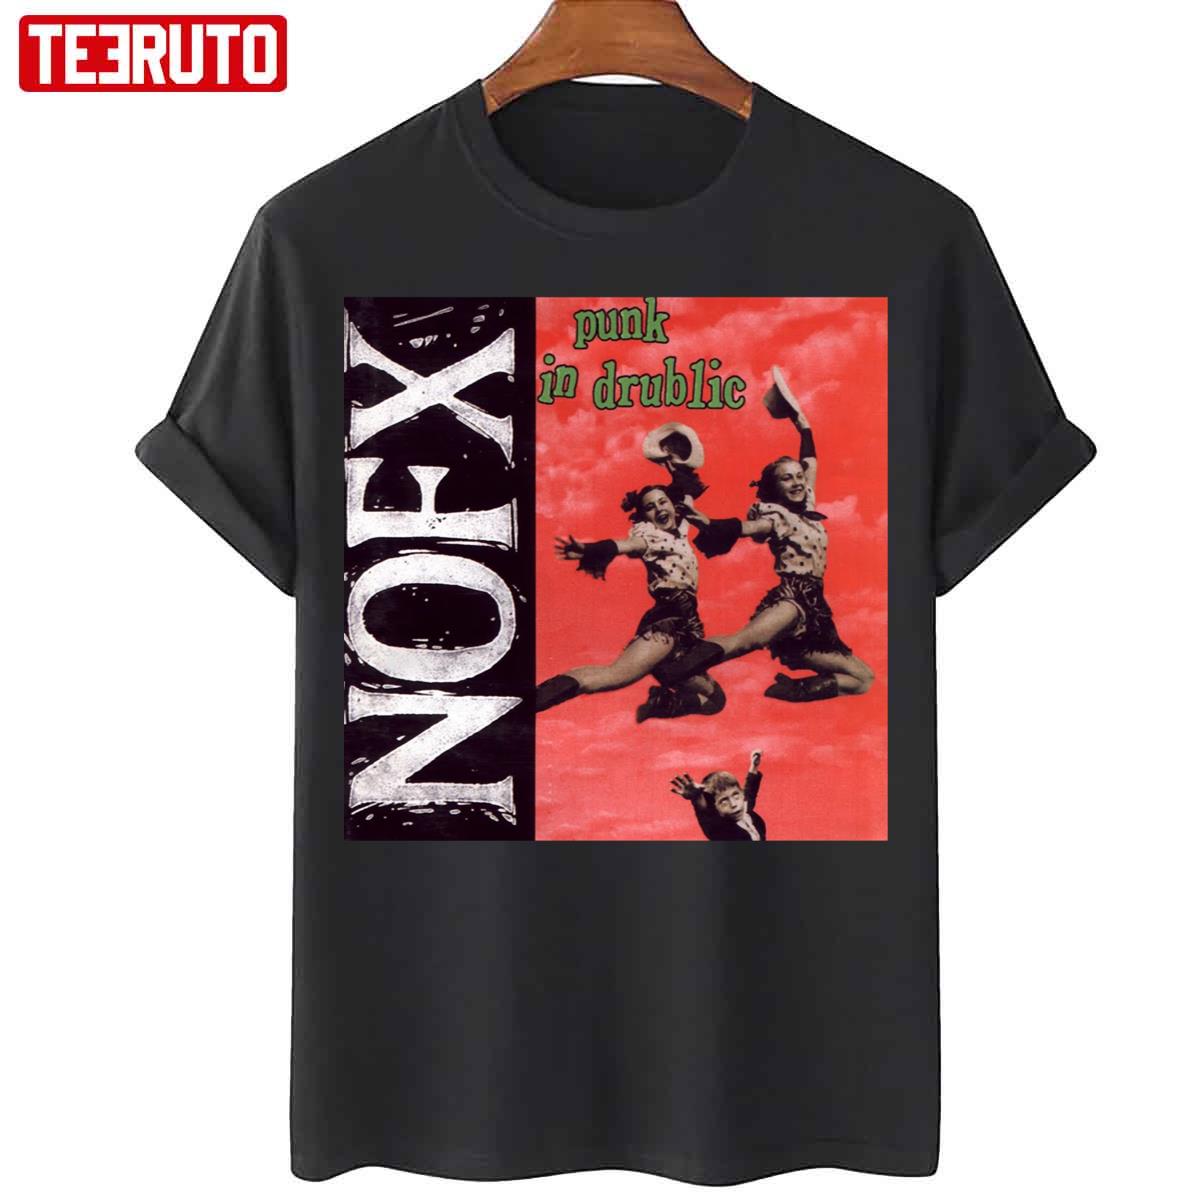 Nofx Punk In Drublic Unisex T-Shirt